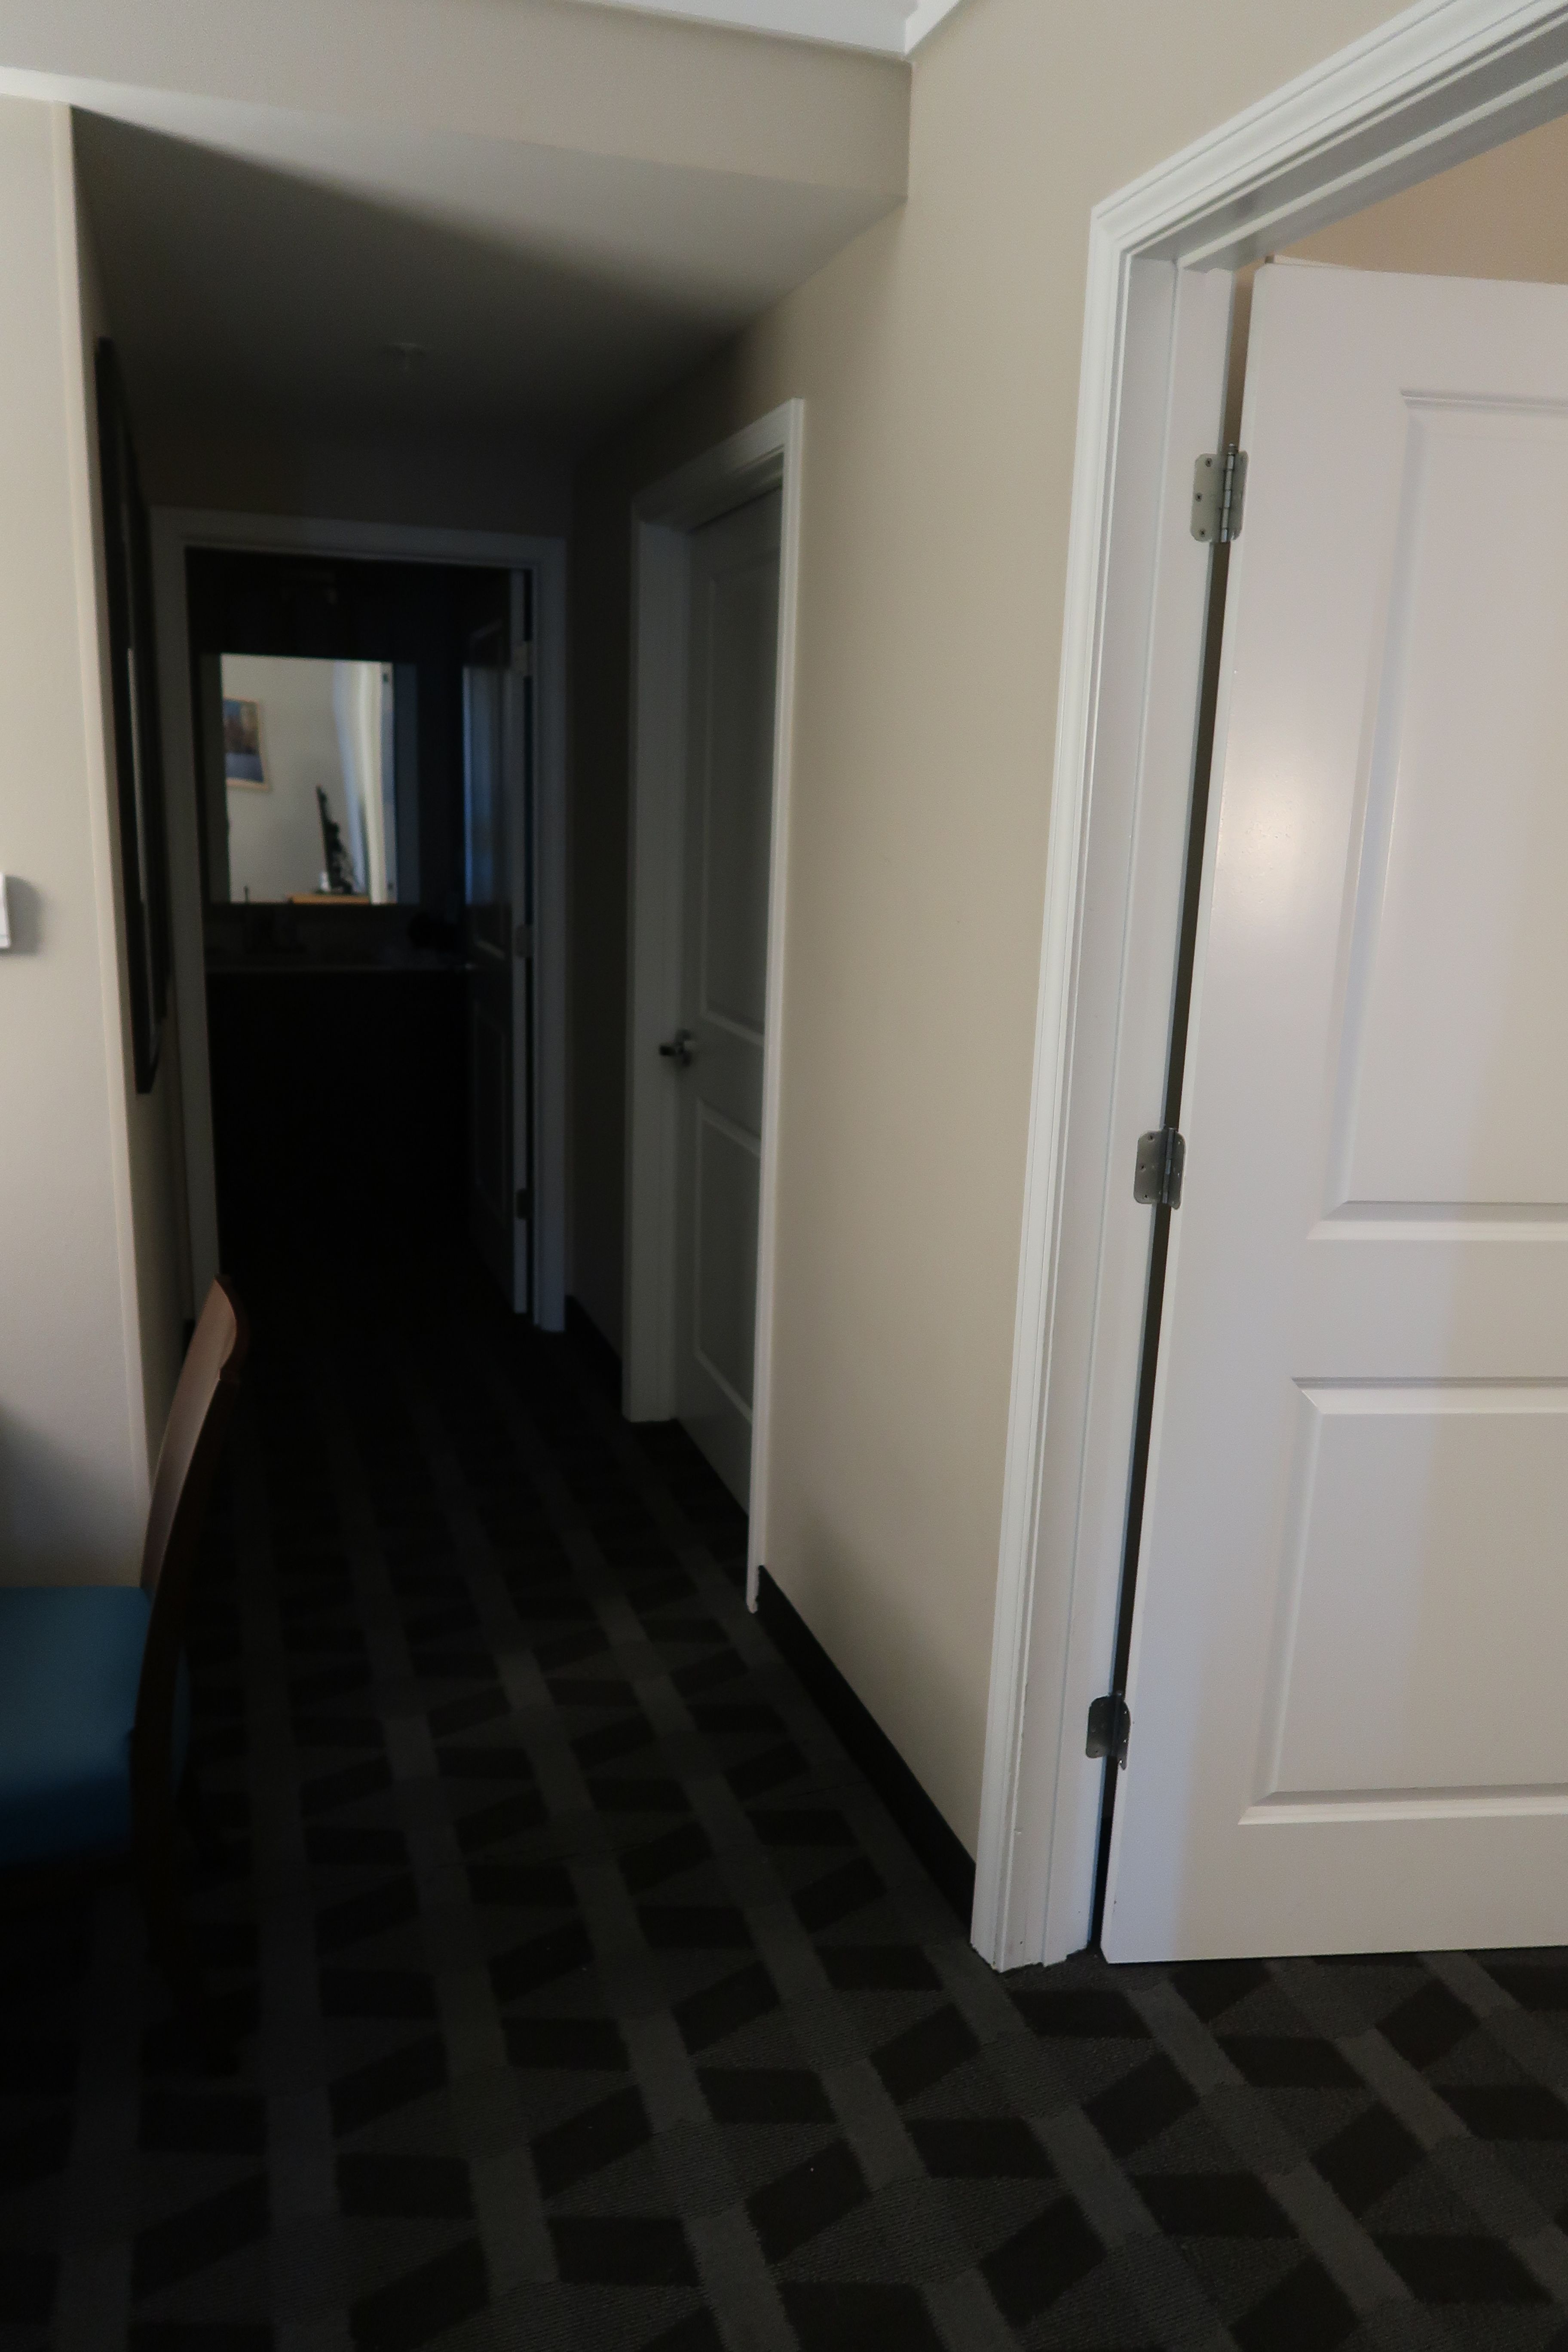 Two bedroom suite Towneplace Suites Marriott in Auburn, Alabama!.JPG